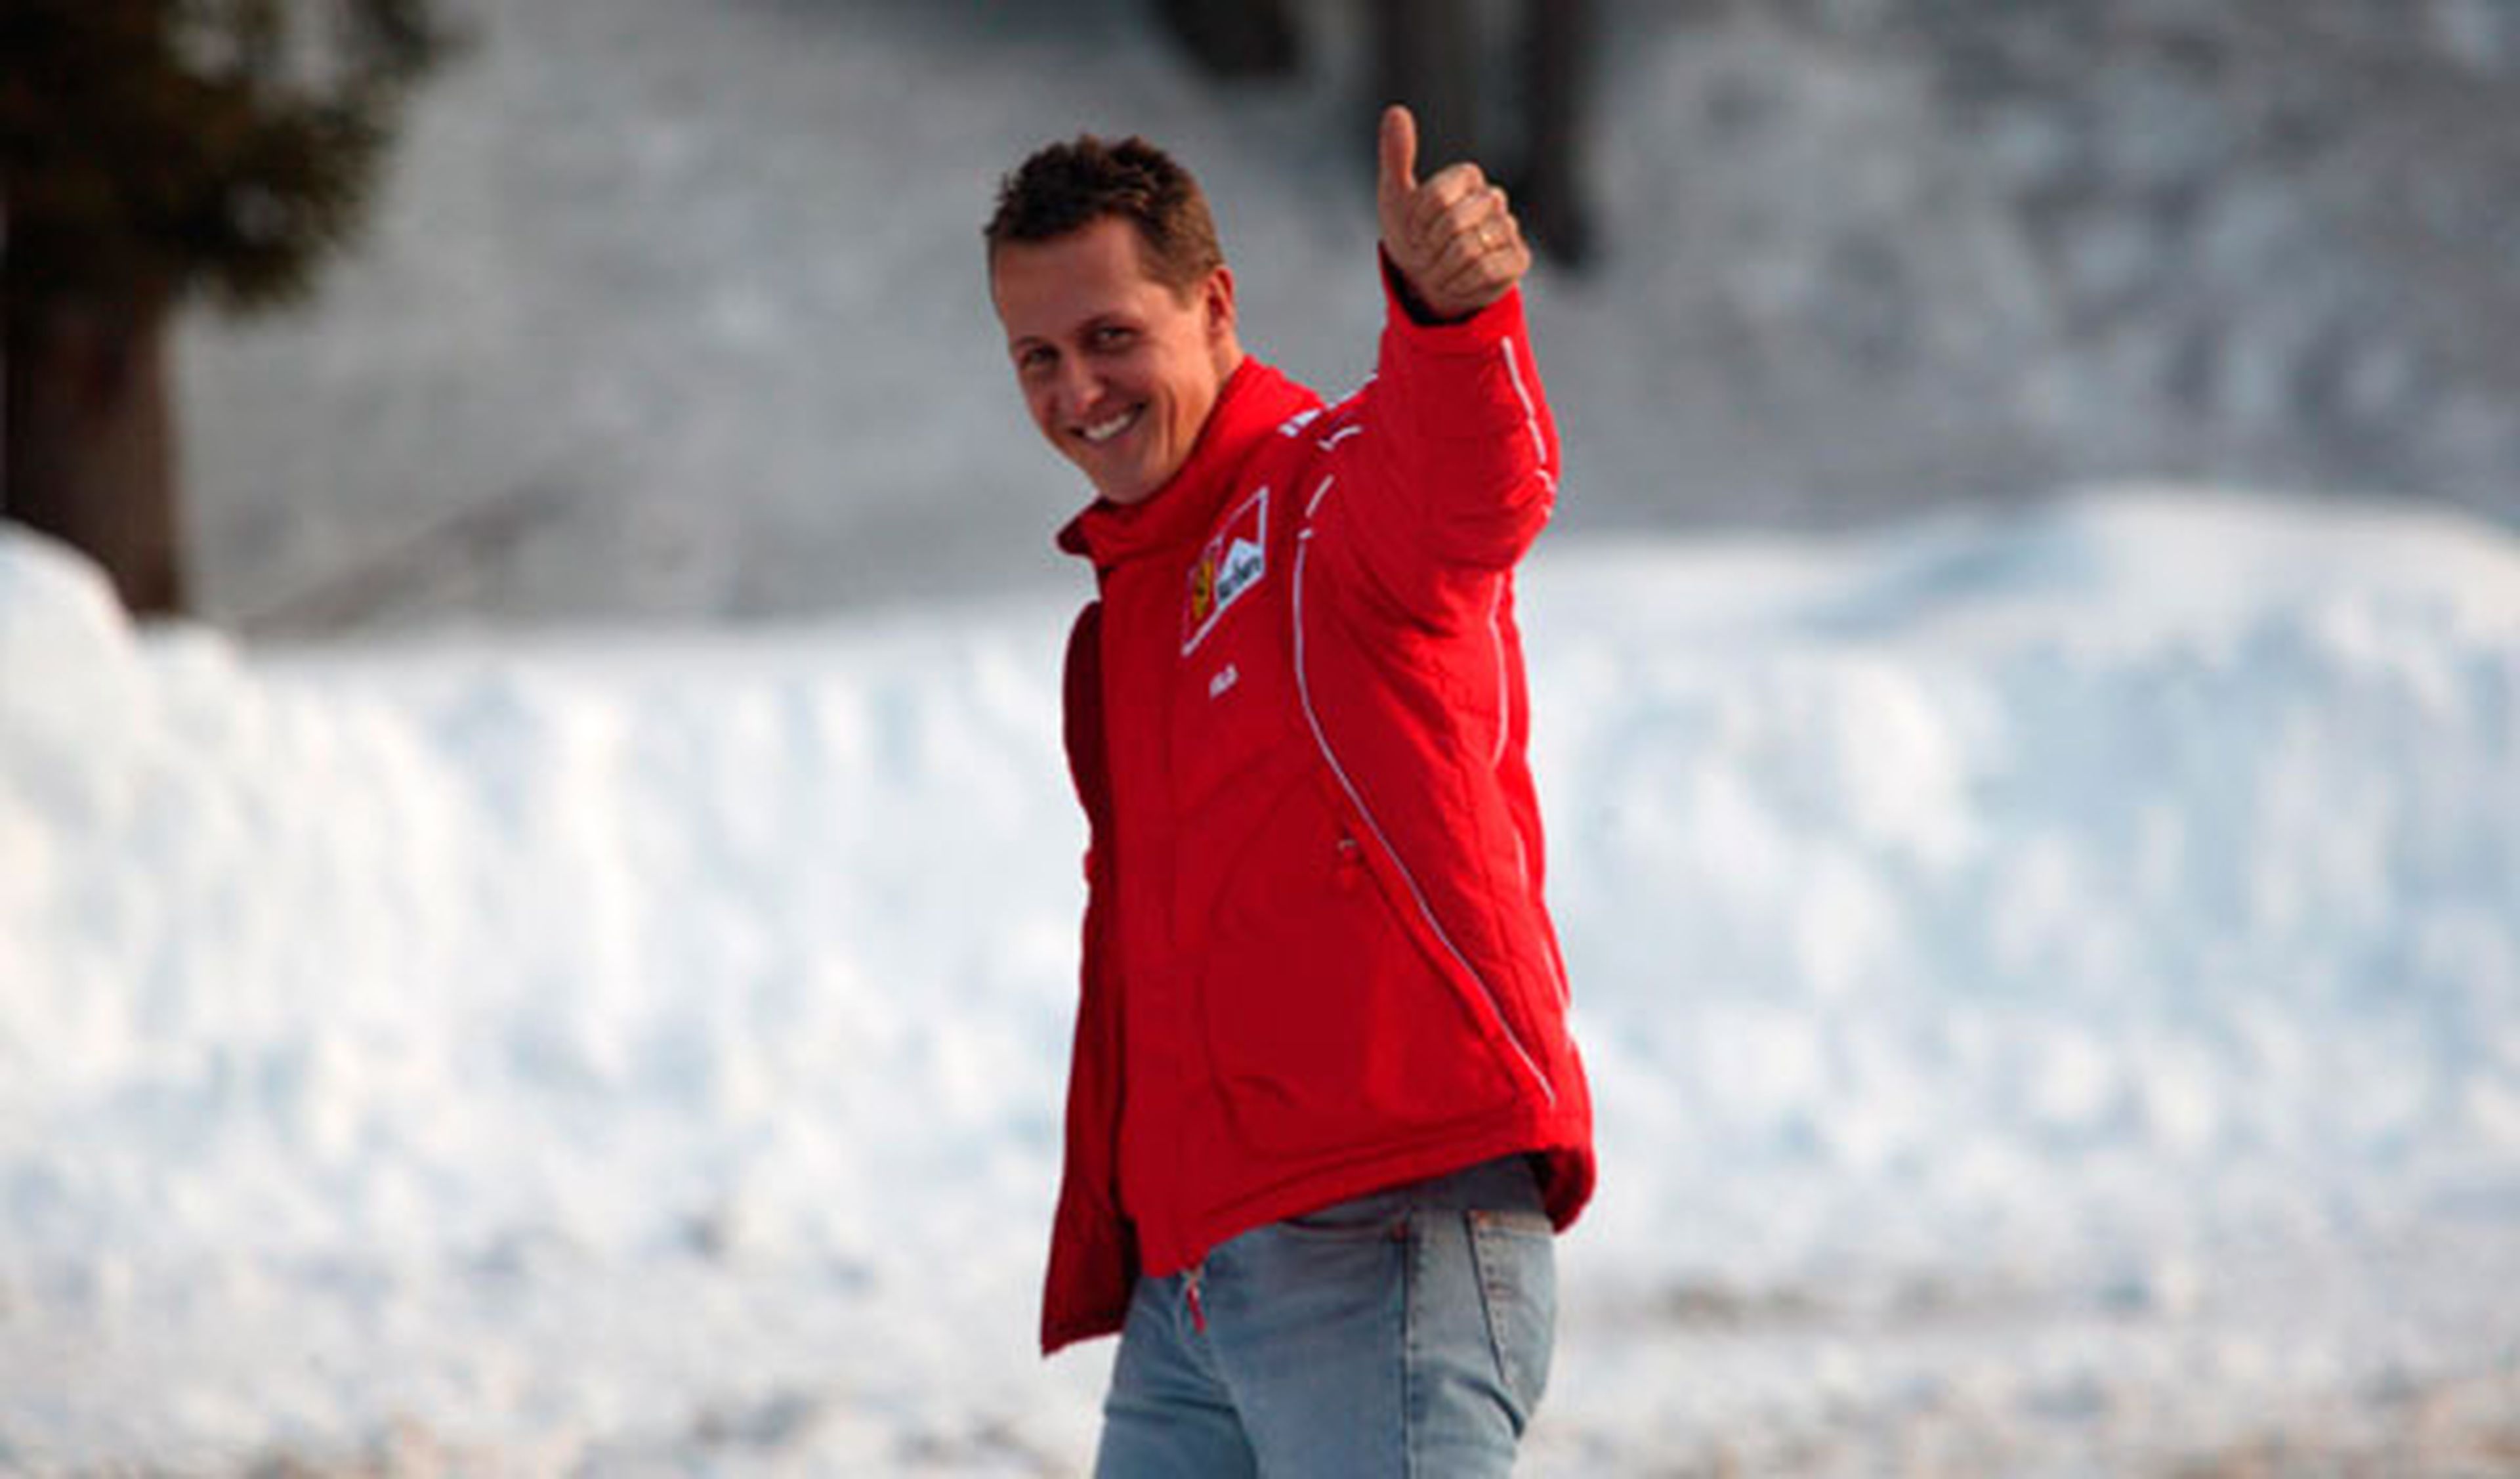 Schumacher sale del coma e ingresa en otro hospital